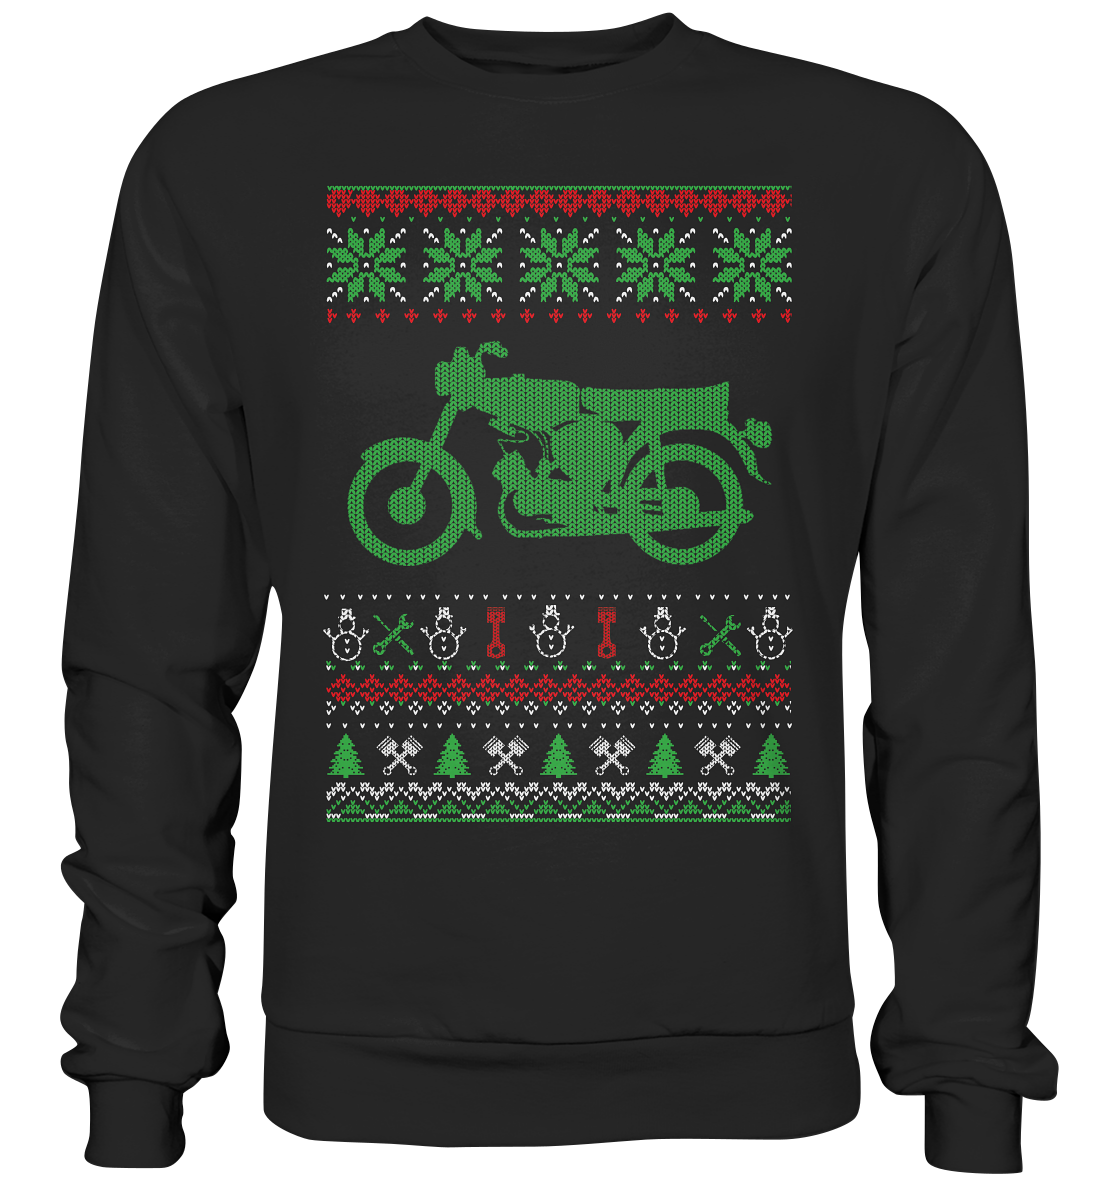 CODUGLY_SGKS51 - Premium Sweatshirt